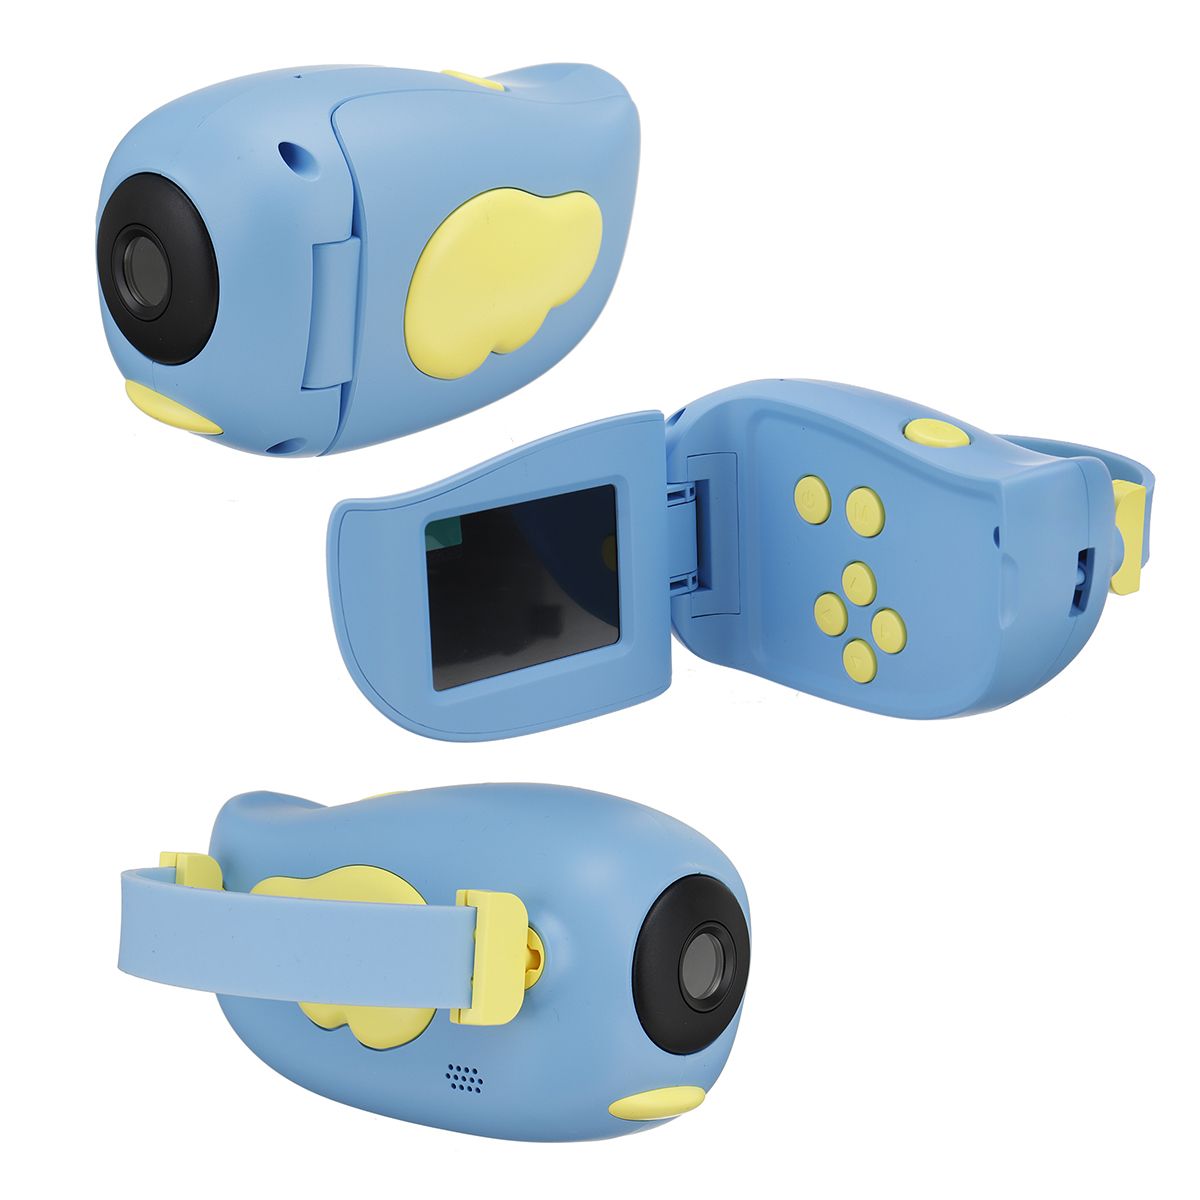 A100-20-Inch-Mini-Digital-Children-Camera-1500W-Pixel-HD-LCD-Camera-Toy-Gift-For-Kids-1764562